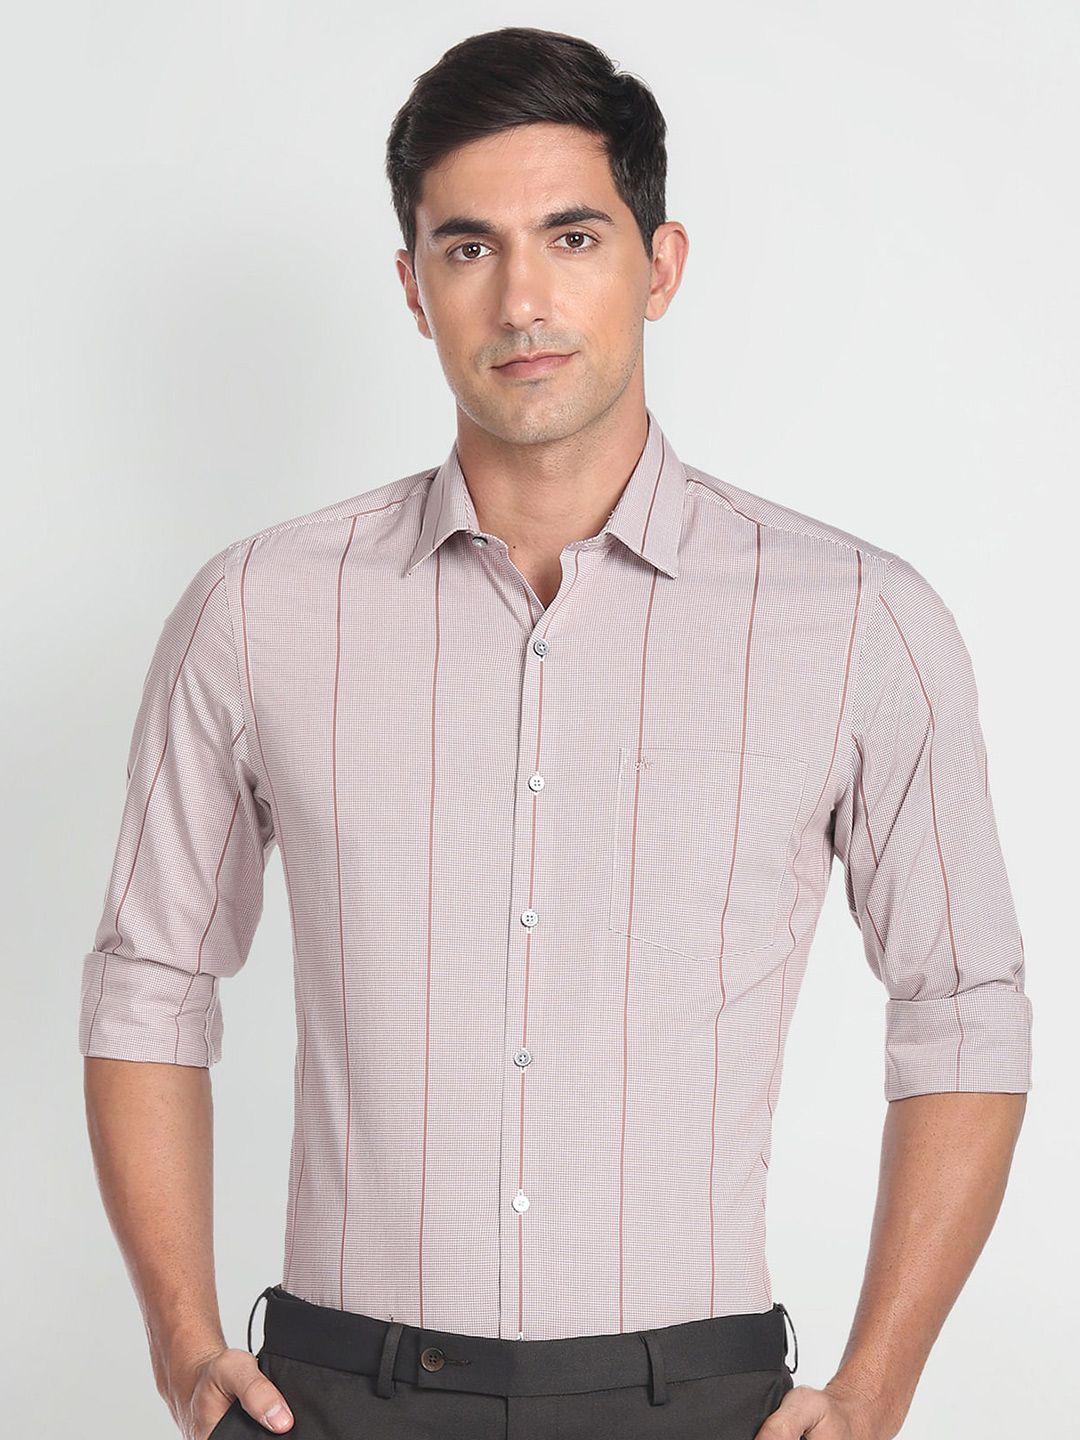 arrow vertical striped pure cotton formal shirt